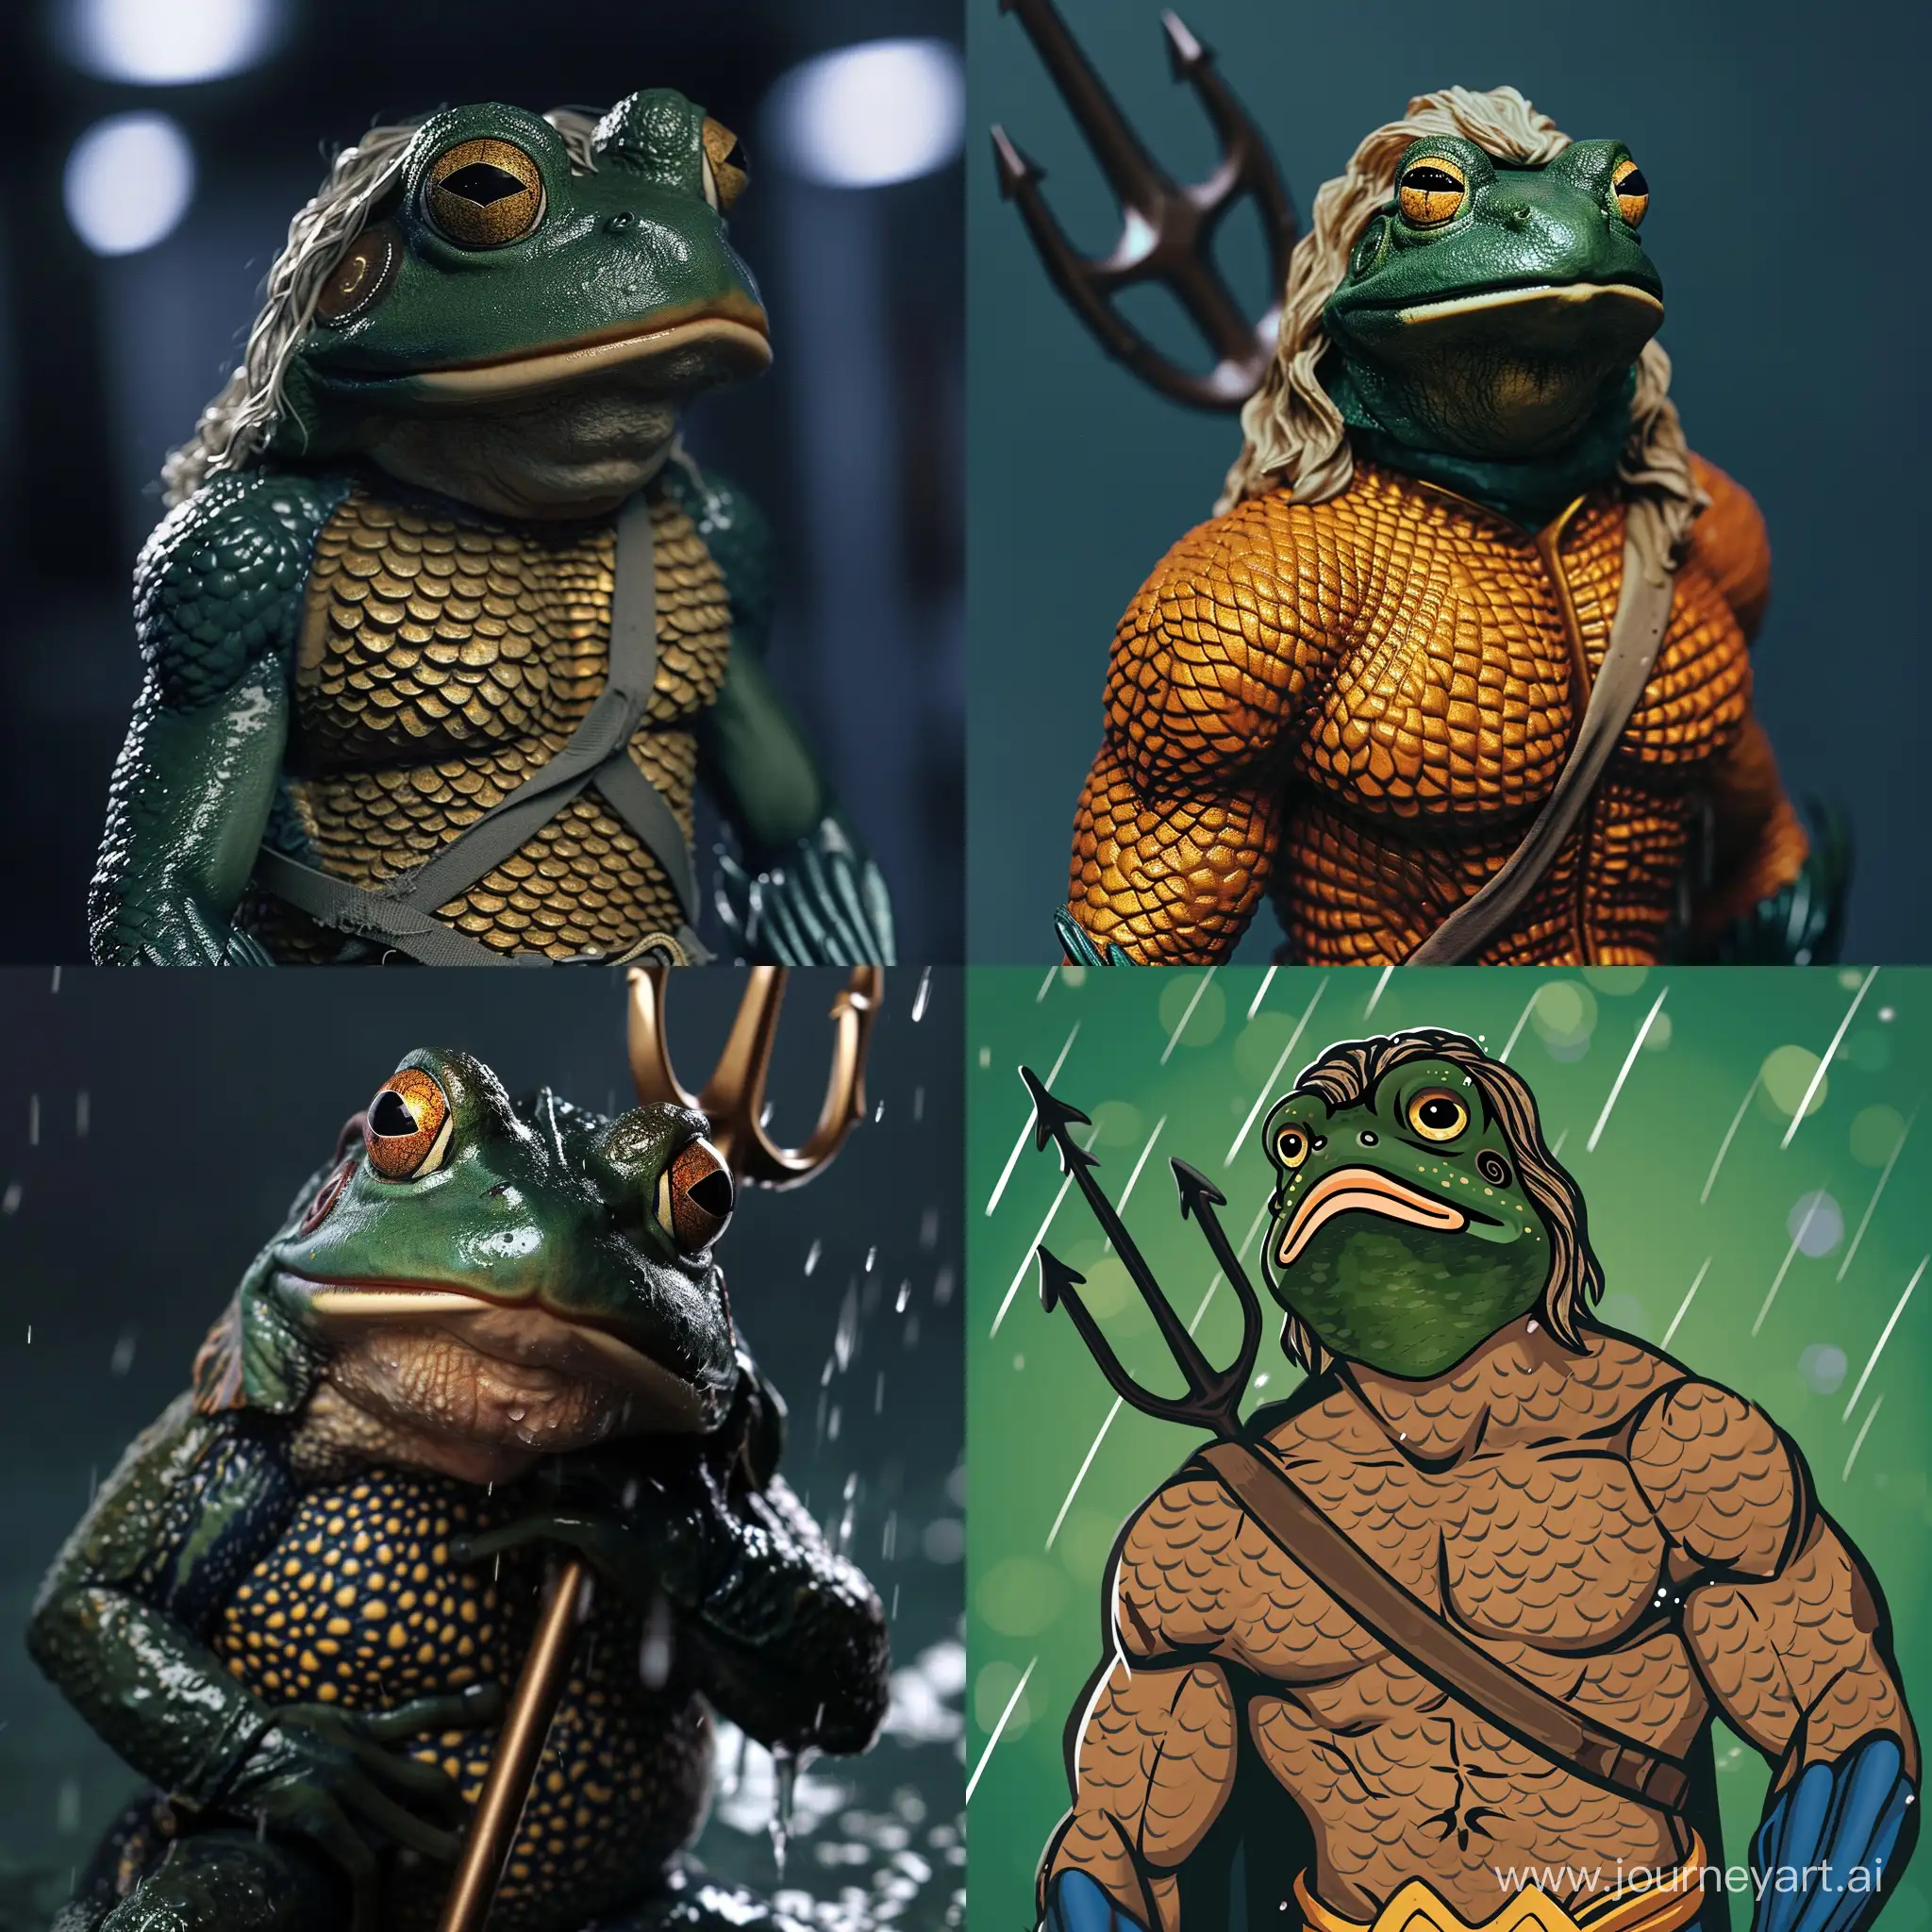 Pepe the frog looking like aquaman